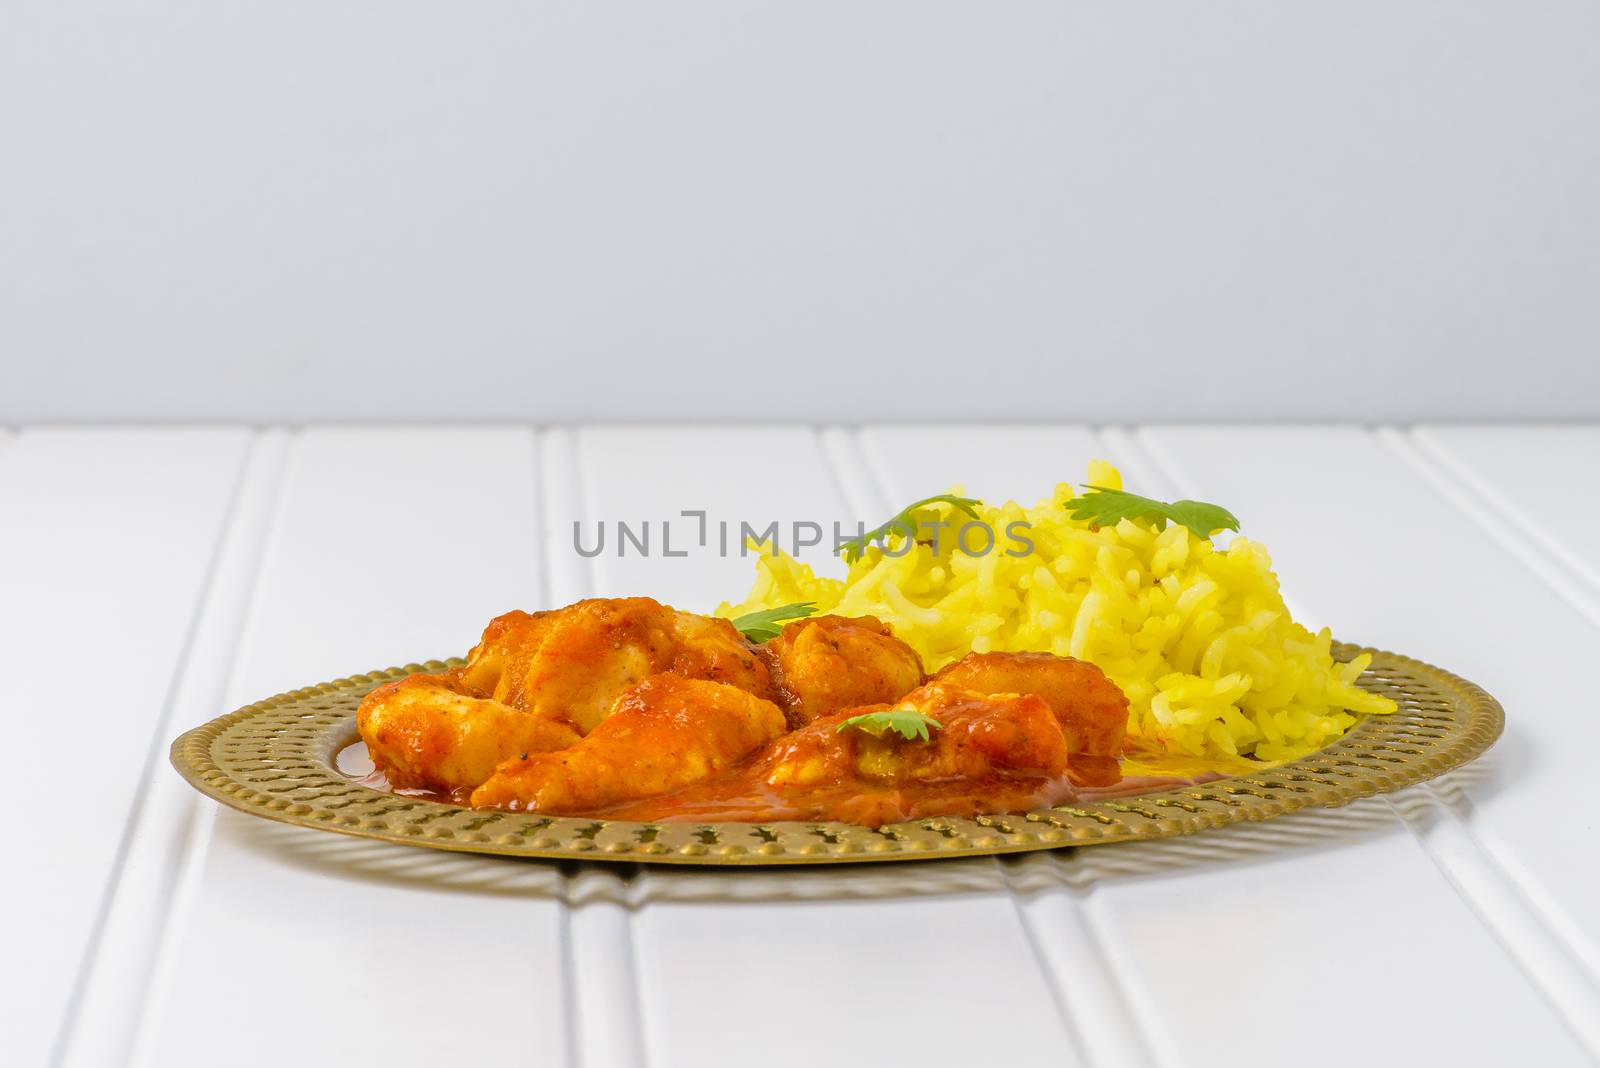 Indian Chicken Vindaloo by billberryphotography